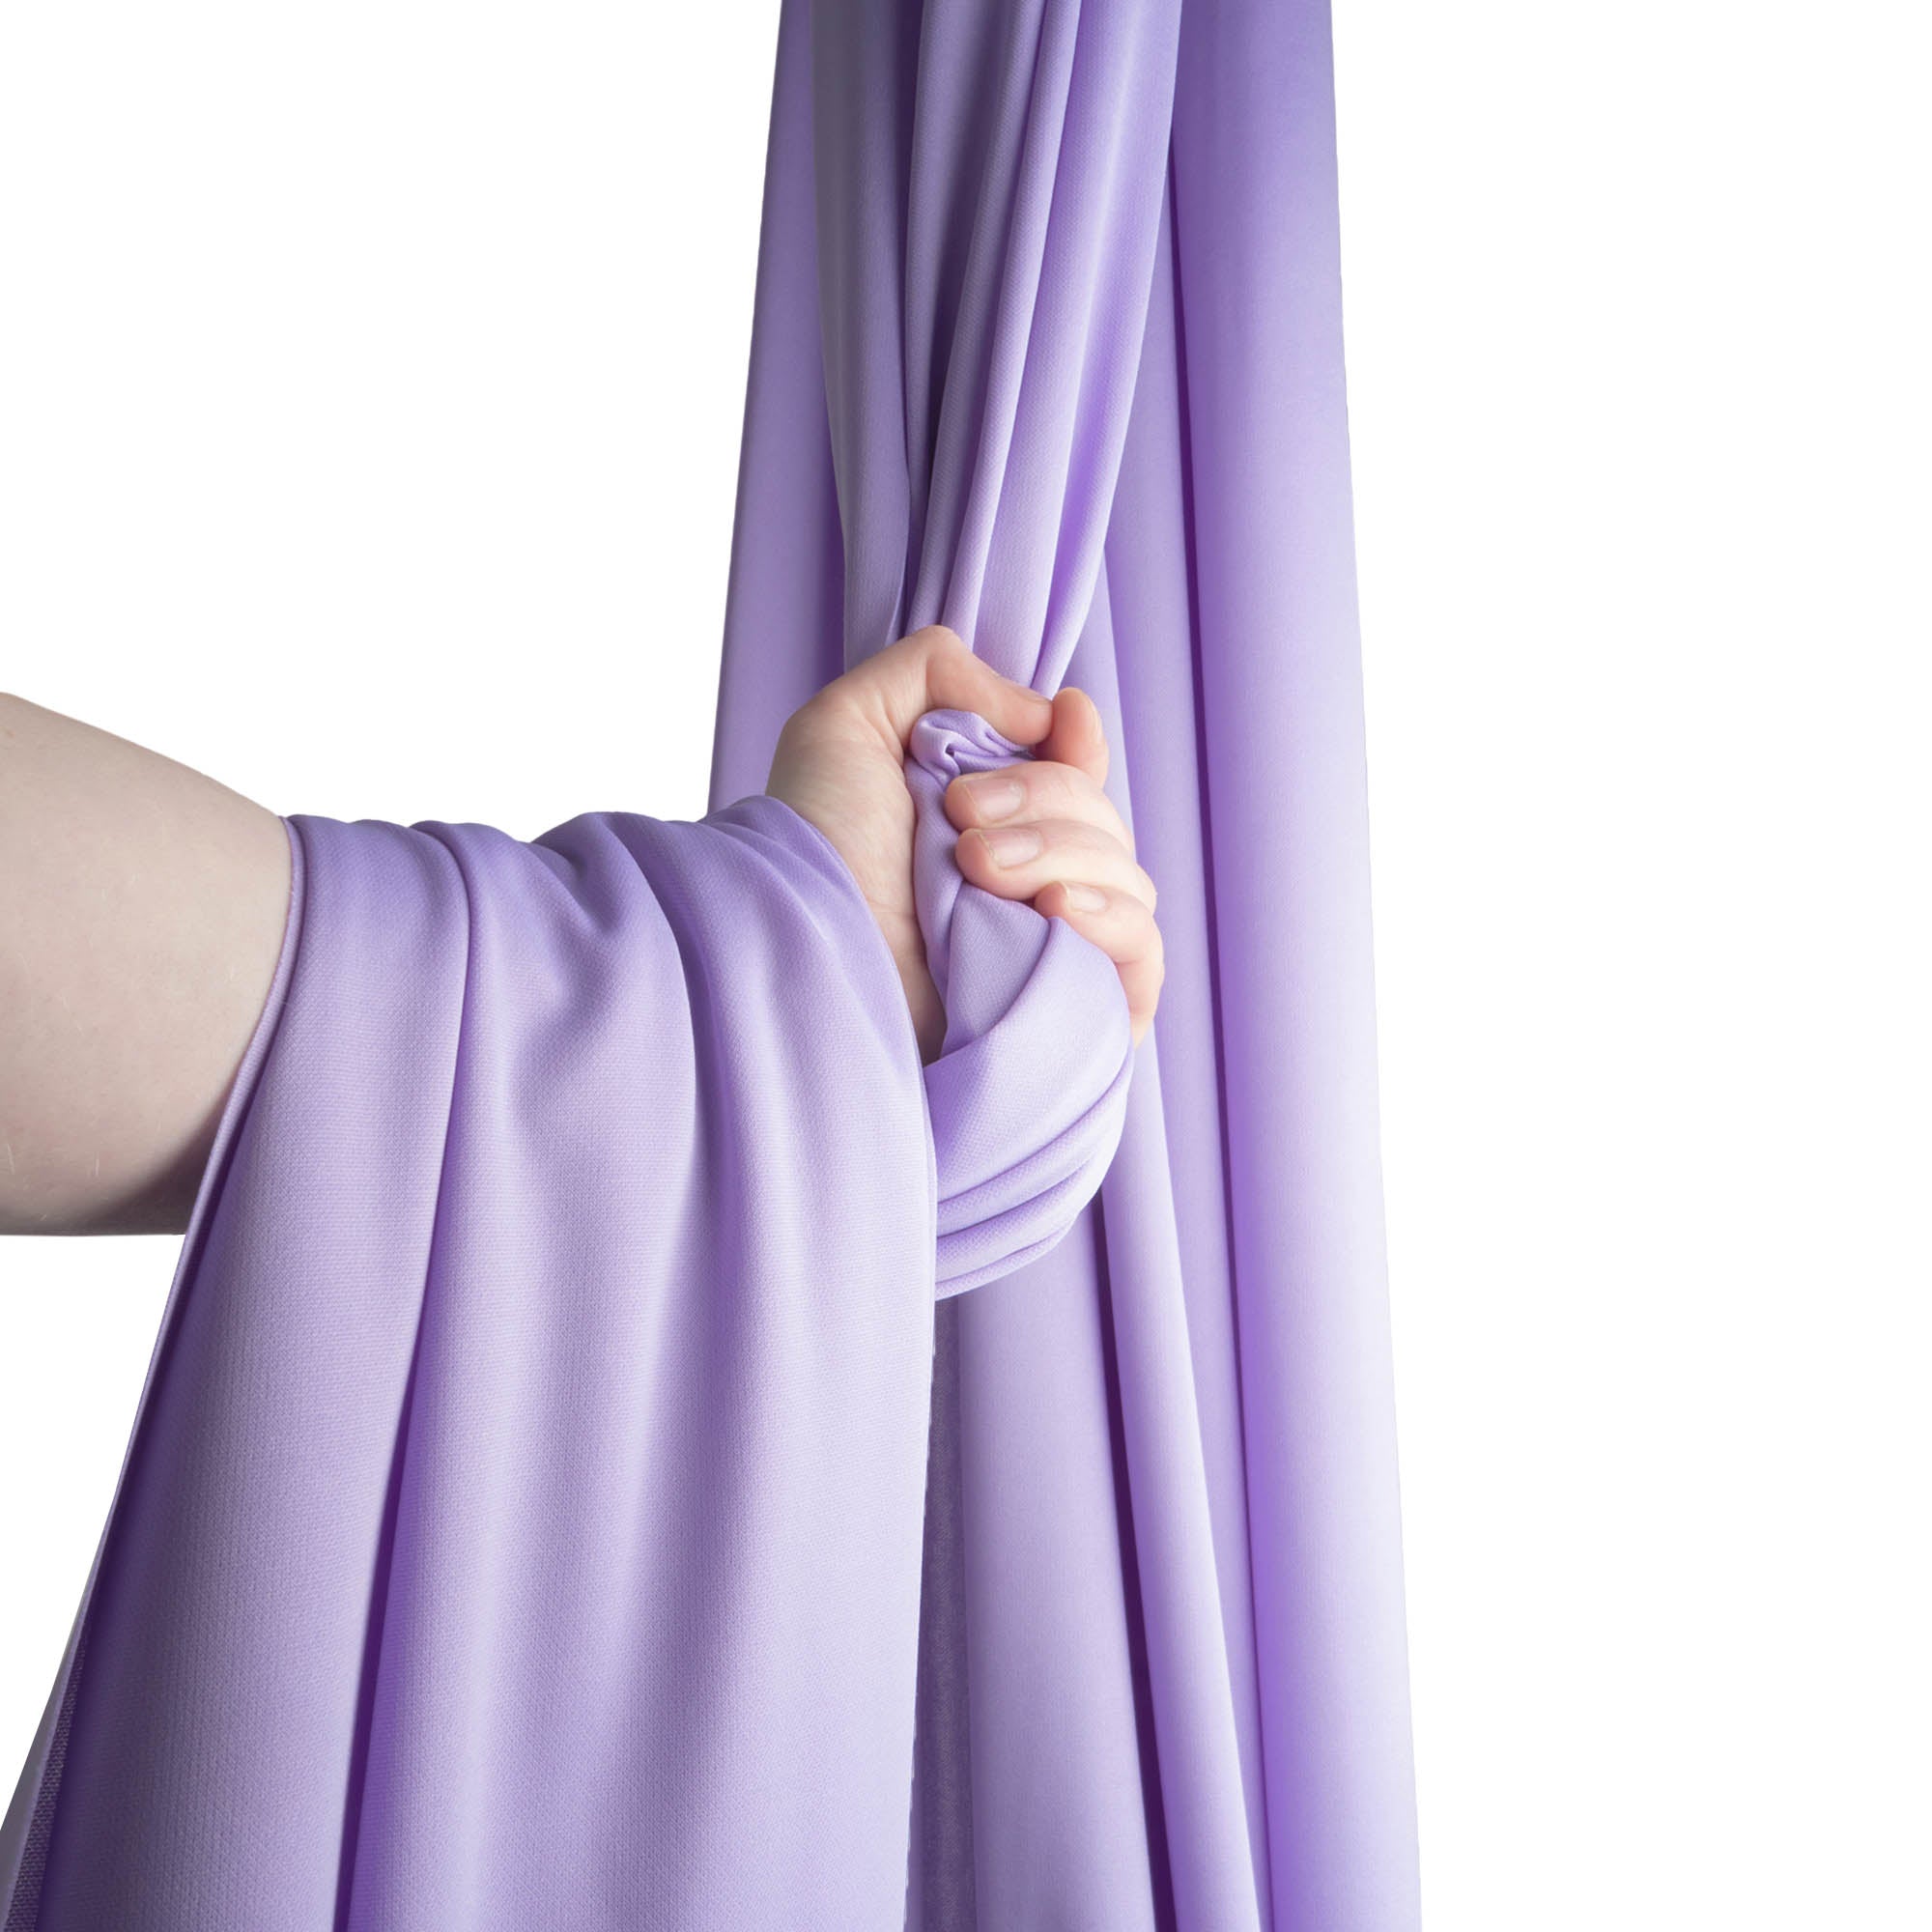 Lavender silk wrapped around hand